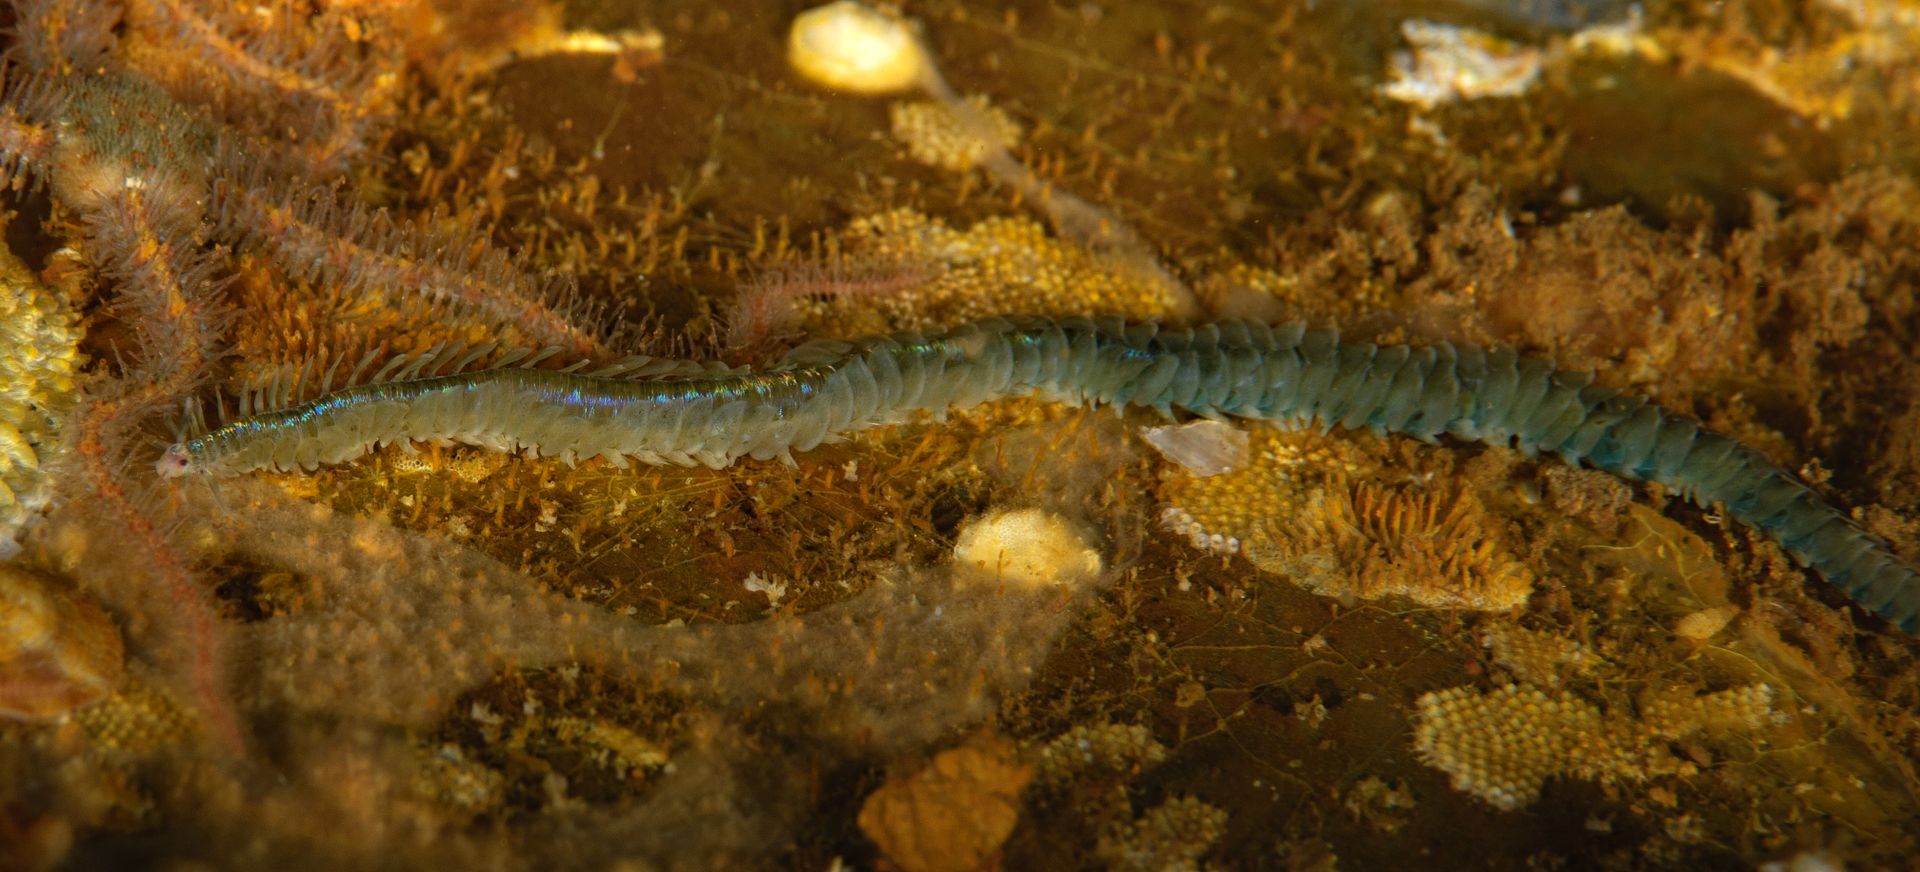  photo Phyllodoce medipapillata paddle worm_ART8240_zpsukwzkr4k.jpg